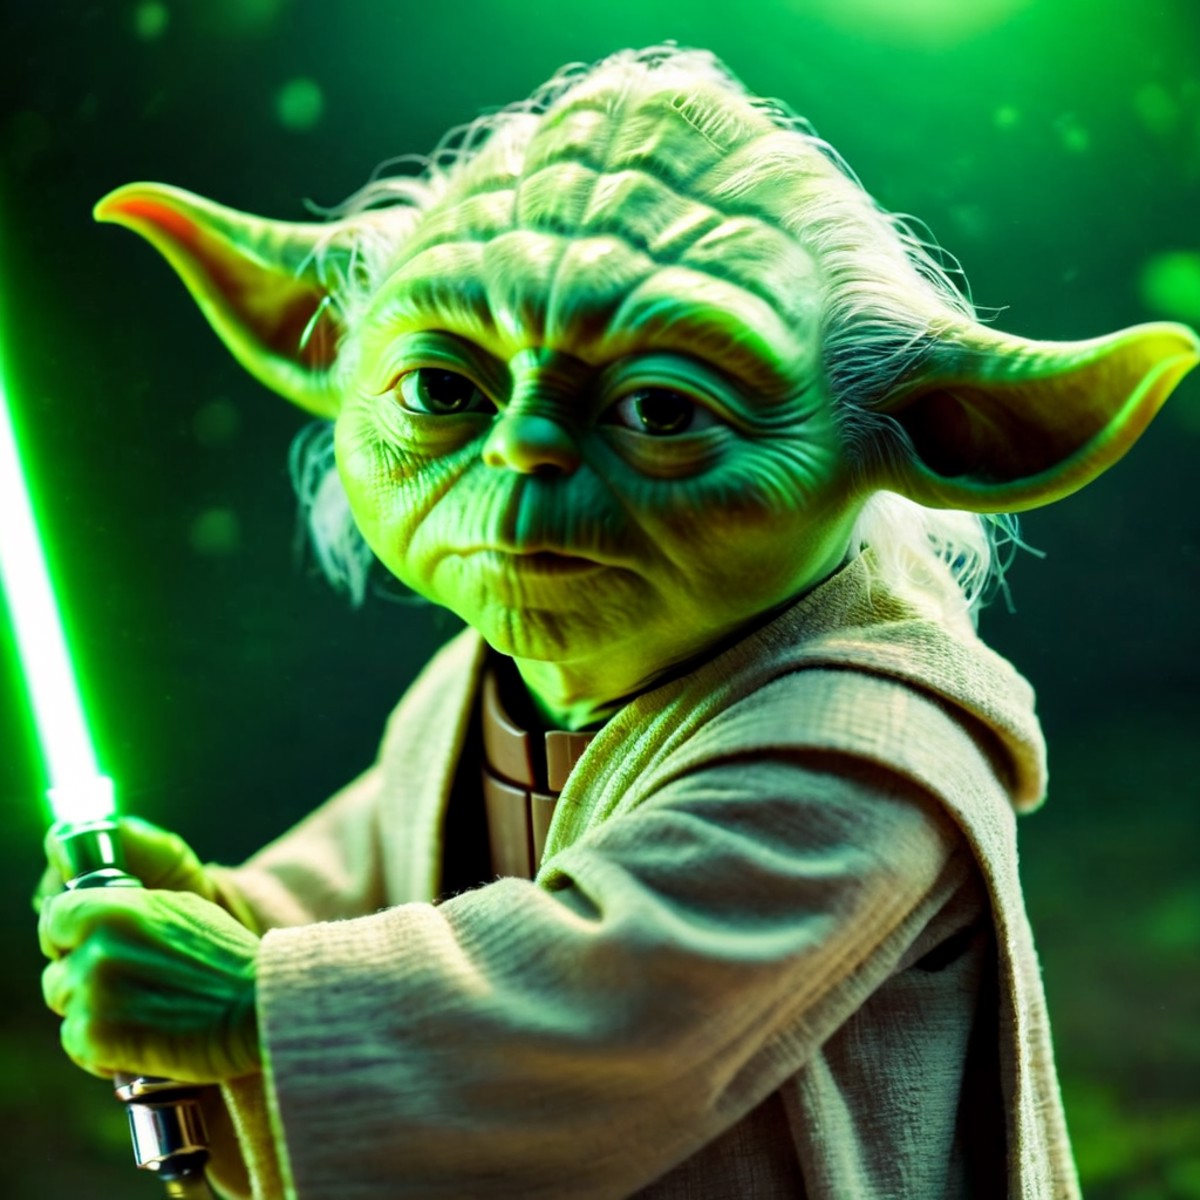 cinematic film still of  <lora:Yoda:1.2>
Yoda a cartoon yodah with a green light saber and jedi rob costume In Star Wars U...